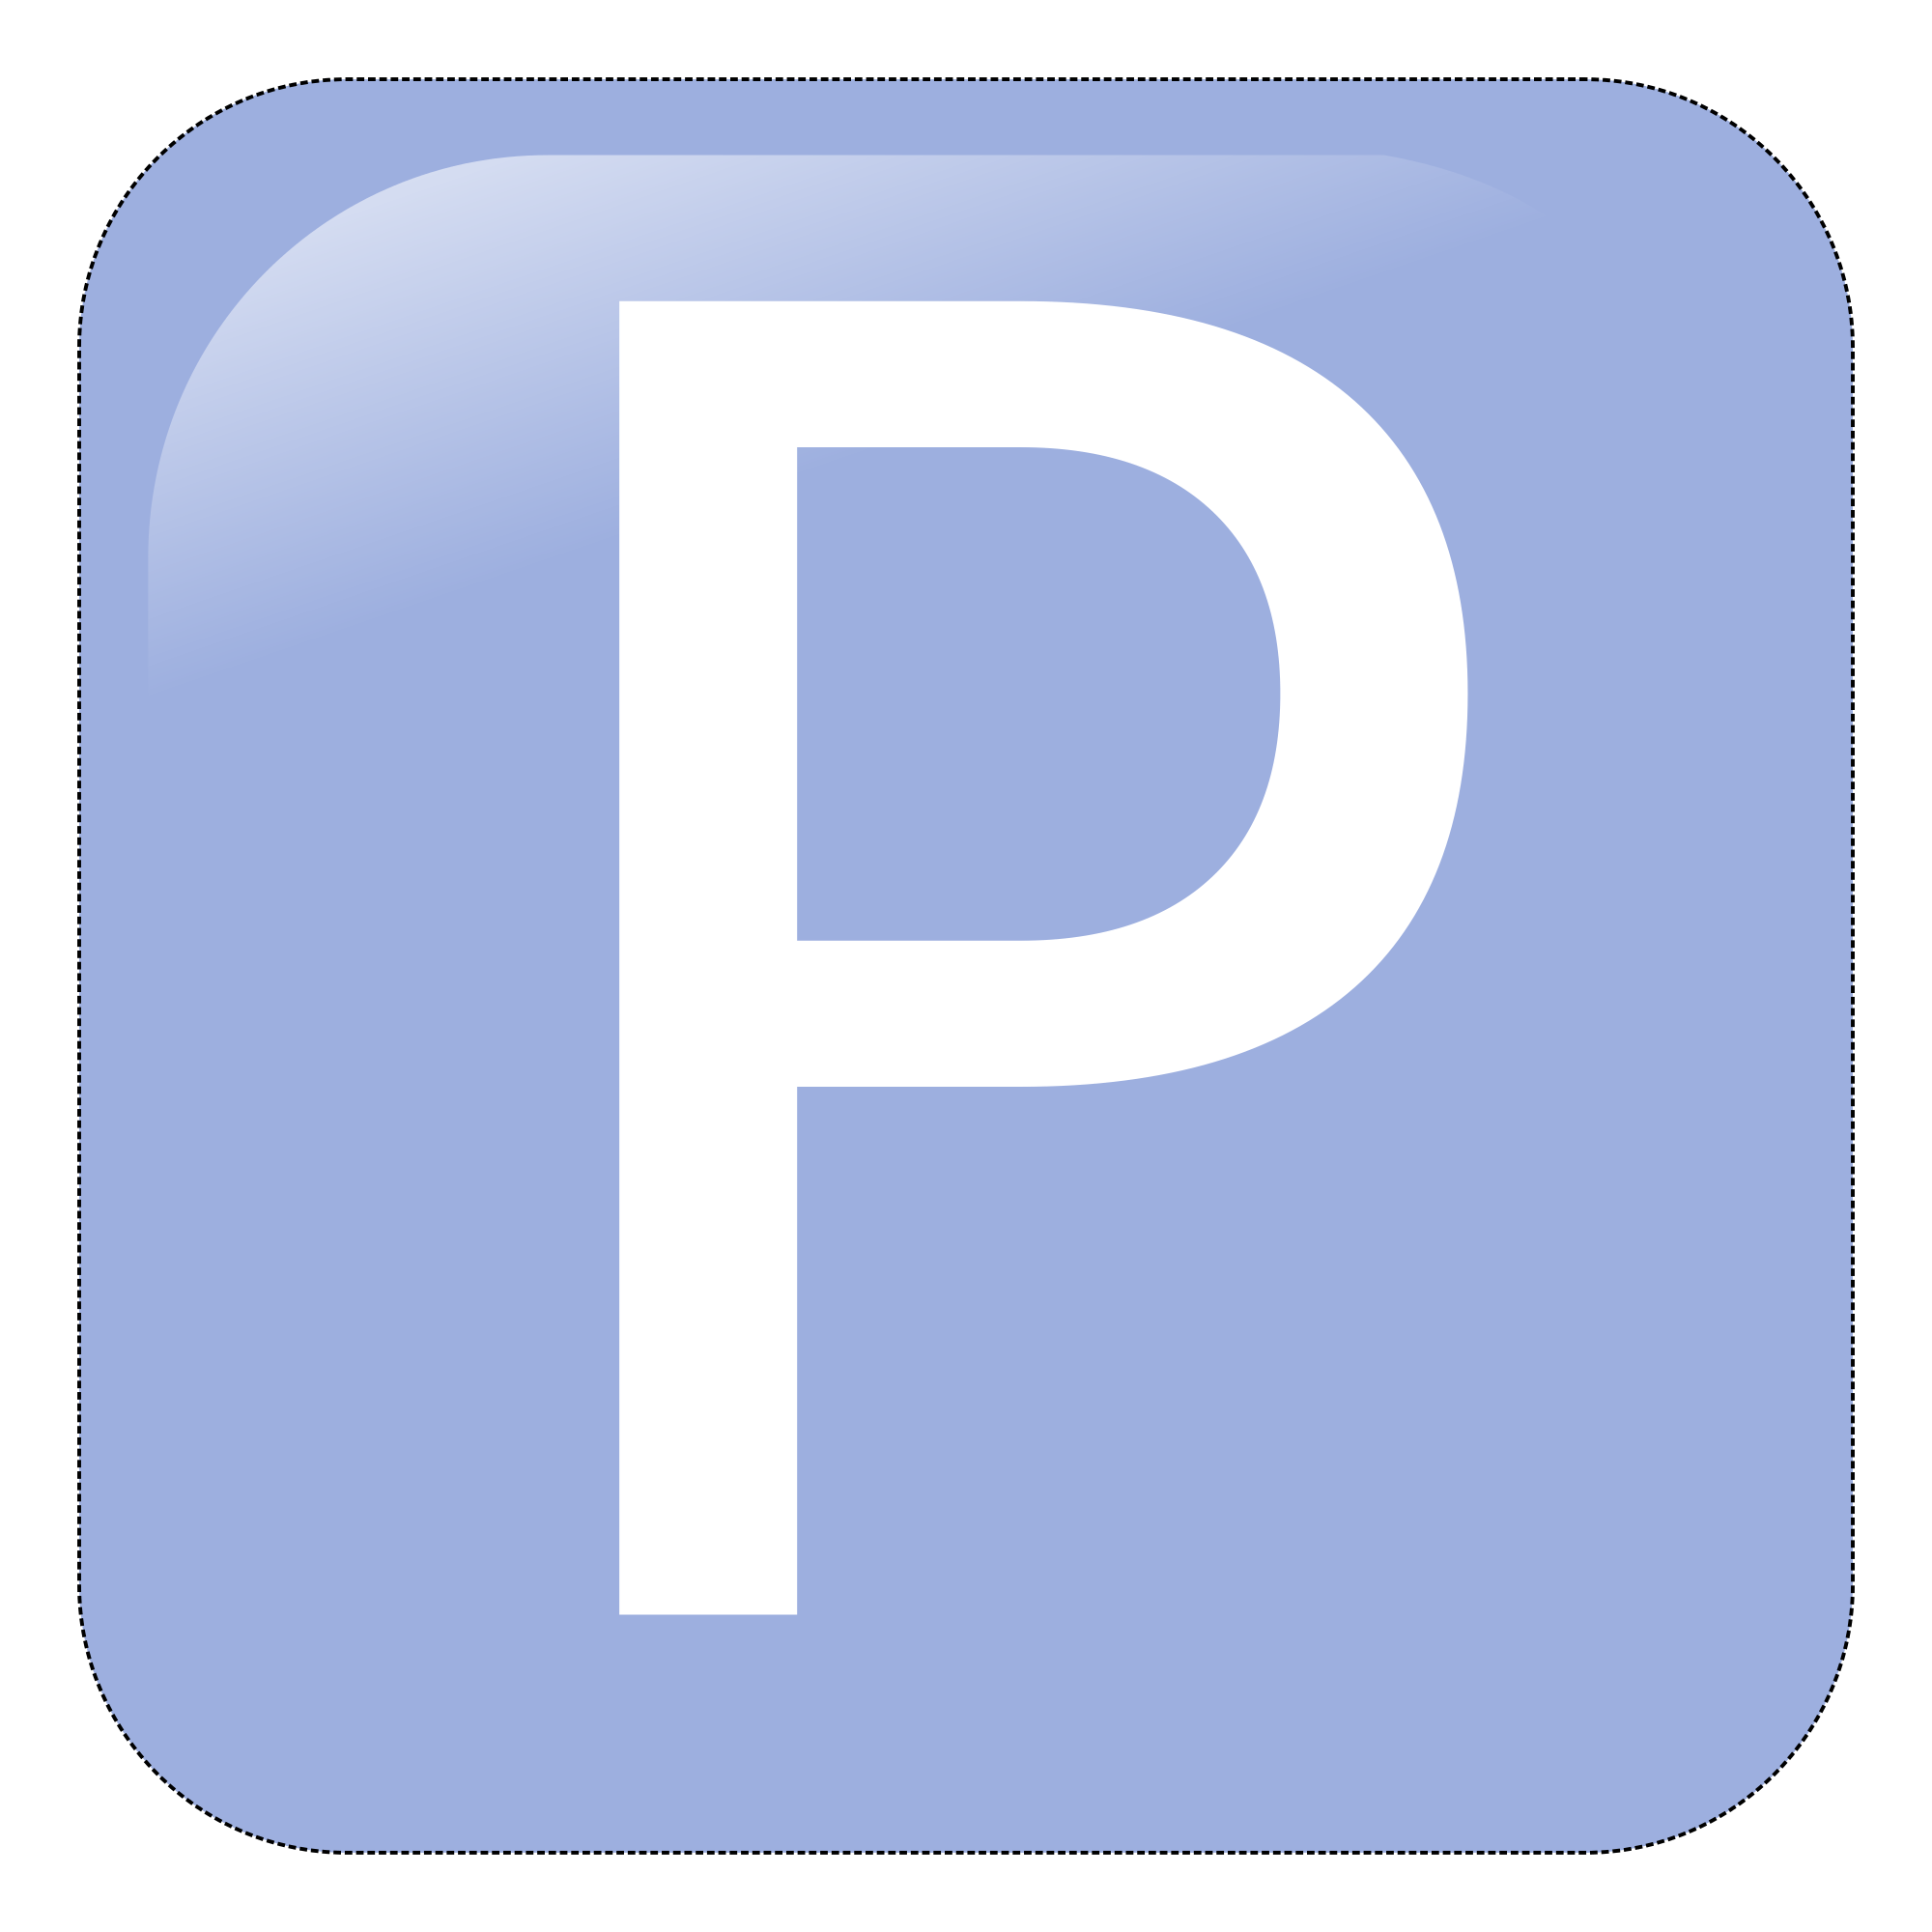 Pandora App Logo - File:Pandora.svg - Wikimedia Commons